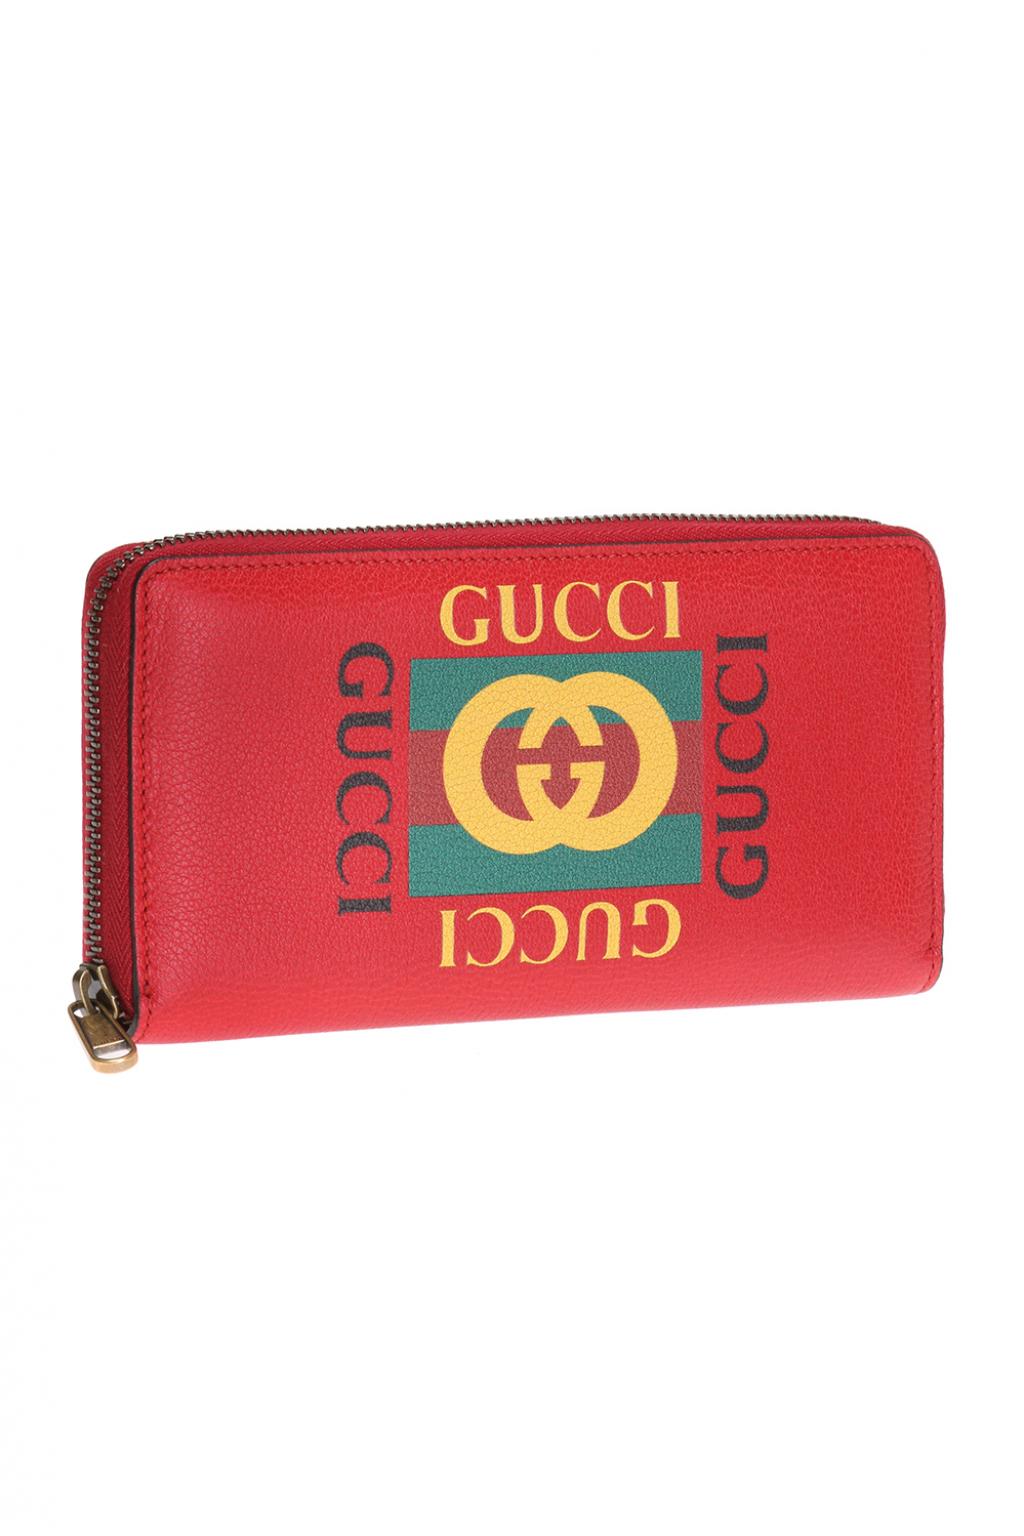 gucci wallet logo